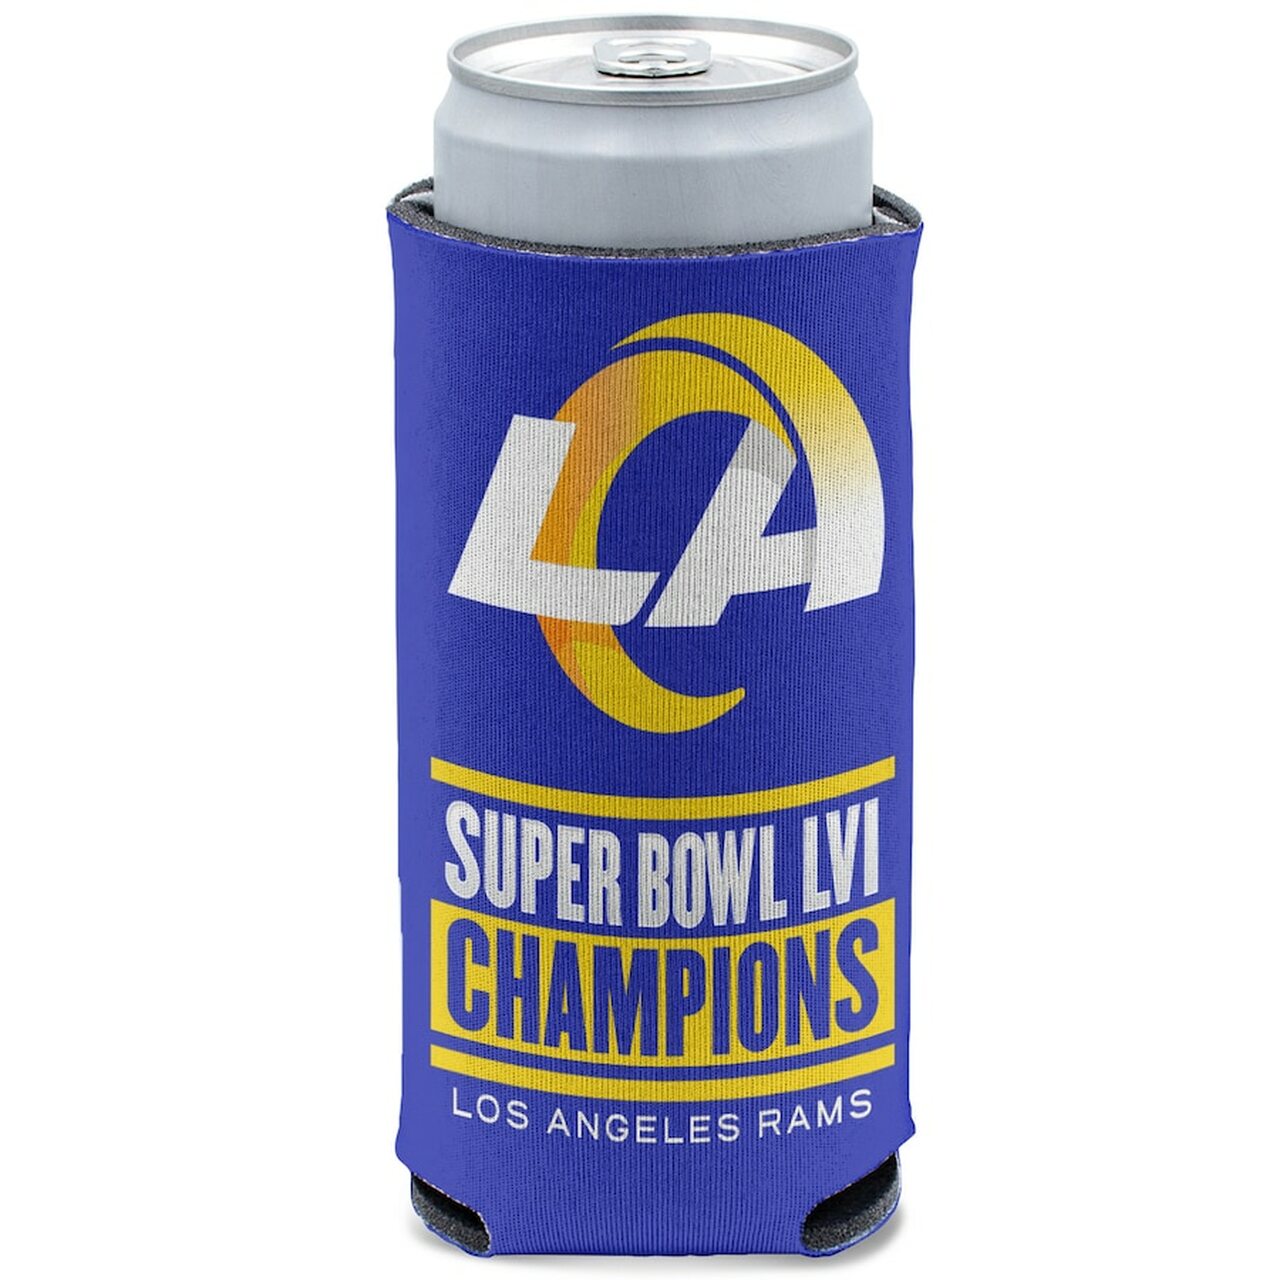 Los Angeles Rams WinCraft Super Bowl LVI Champions 12oz. Slim Can Cooler